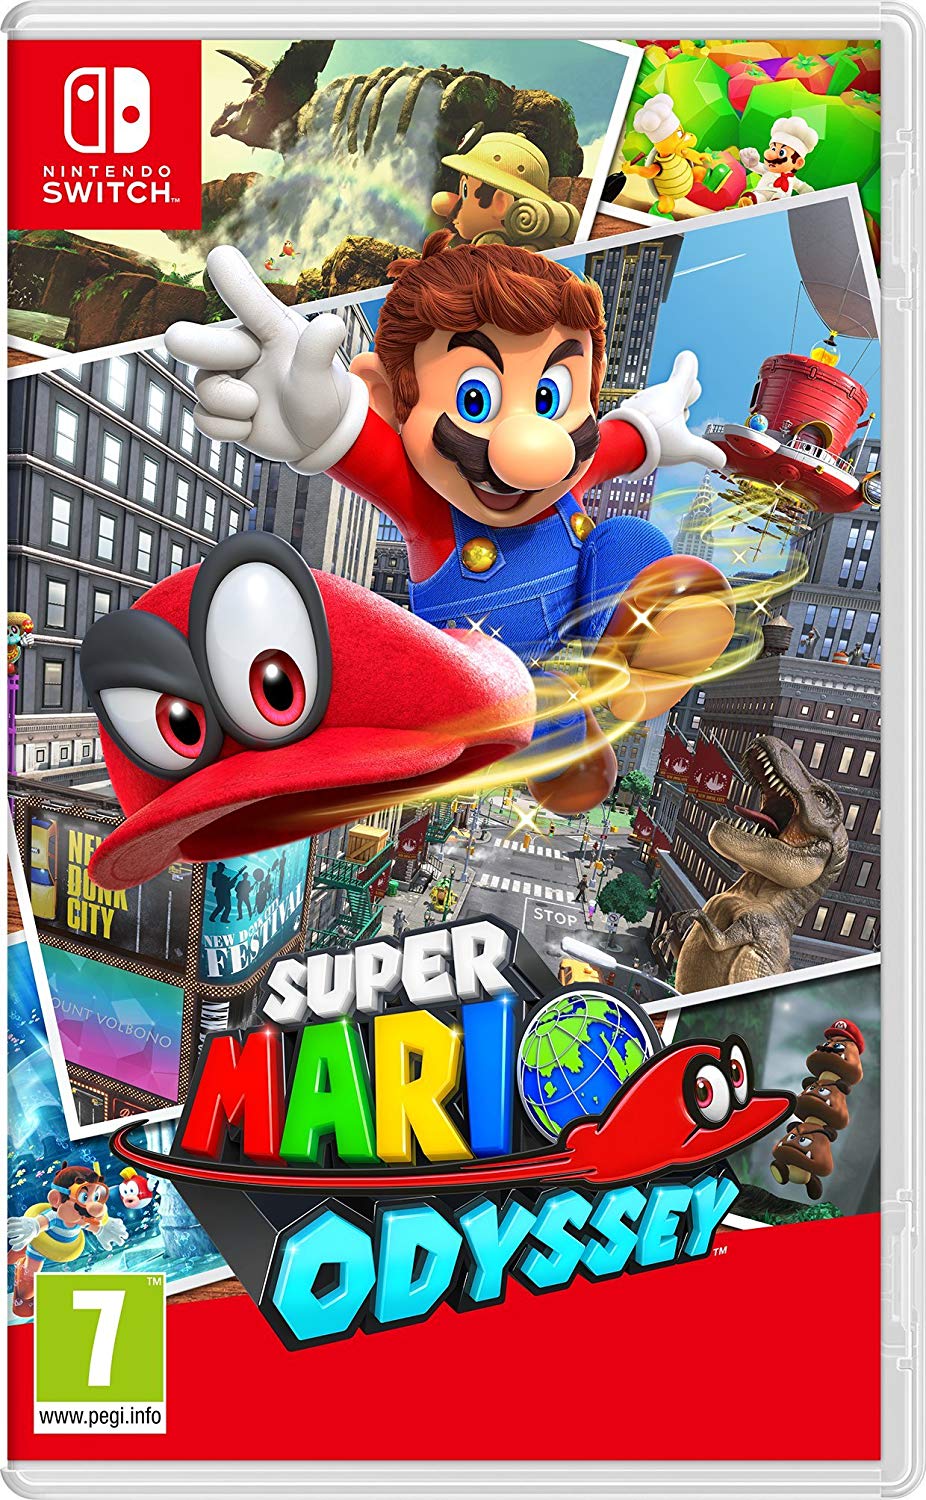 Super Mario Odyssey Digital Download Key (Nintendo Switch): Europe